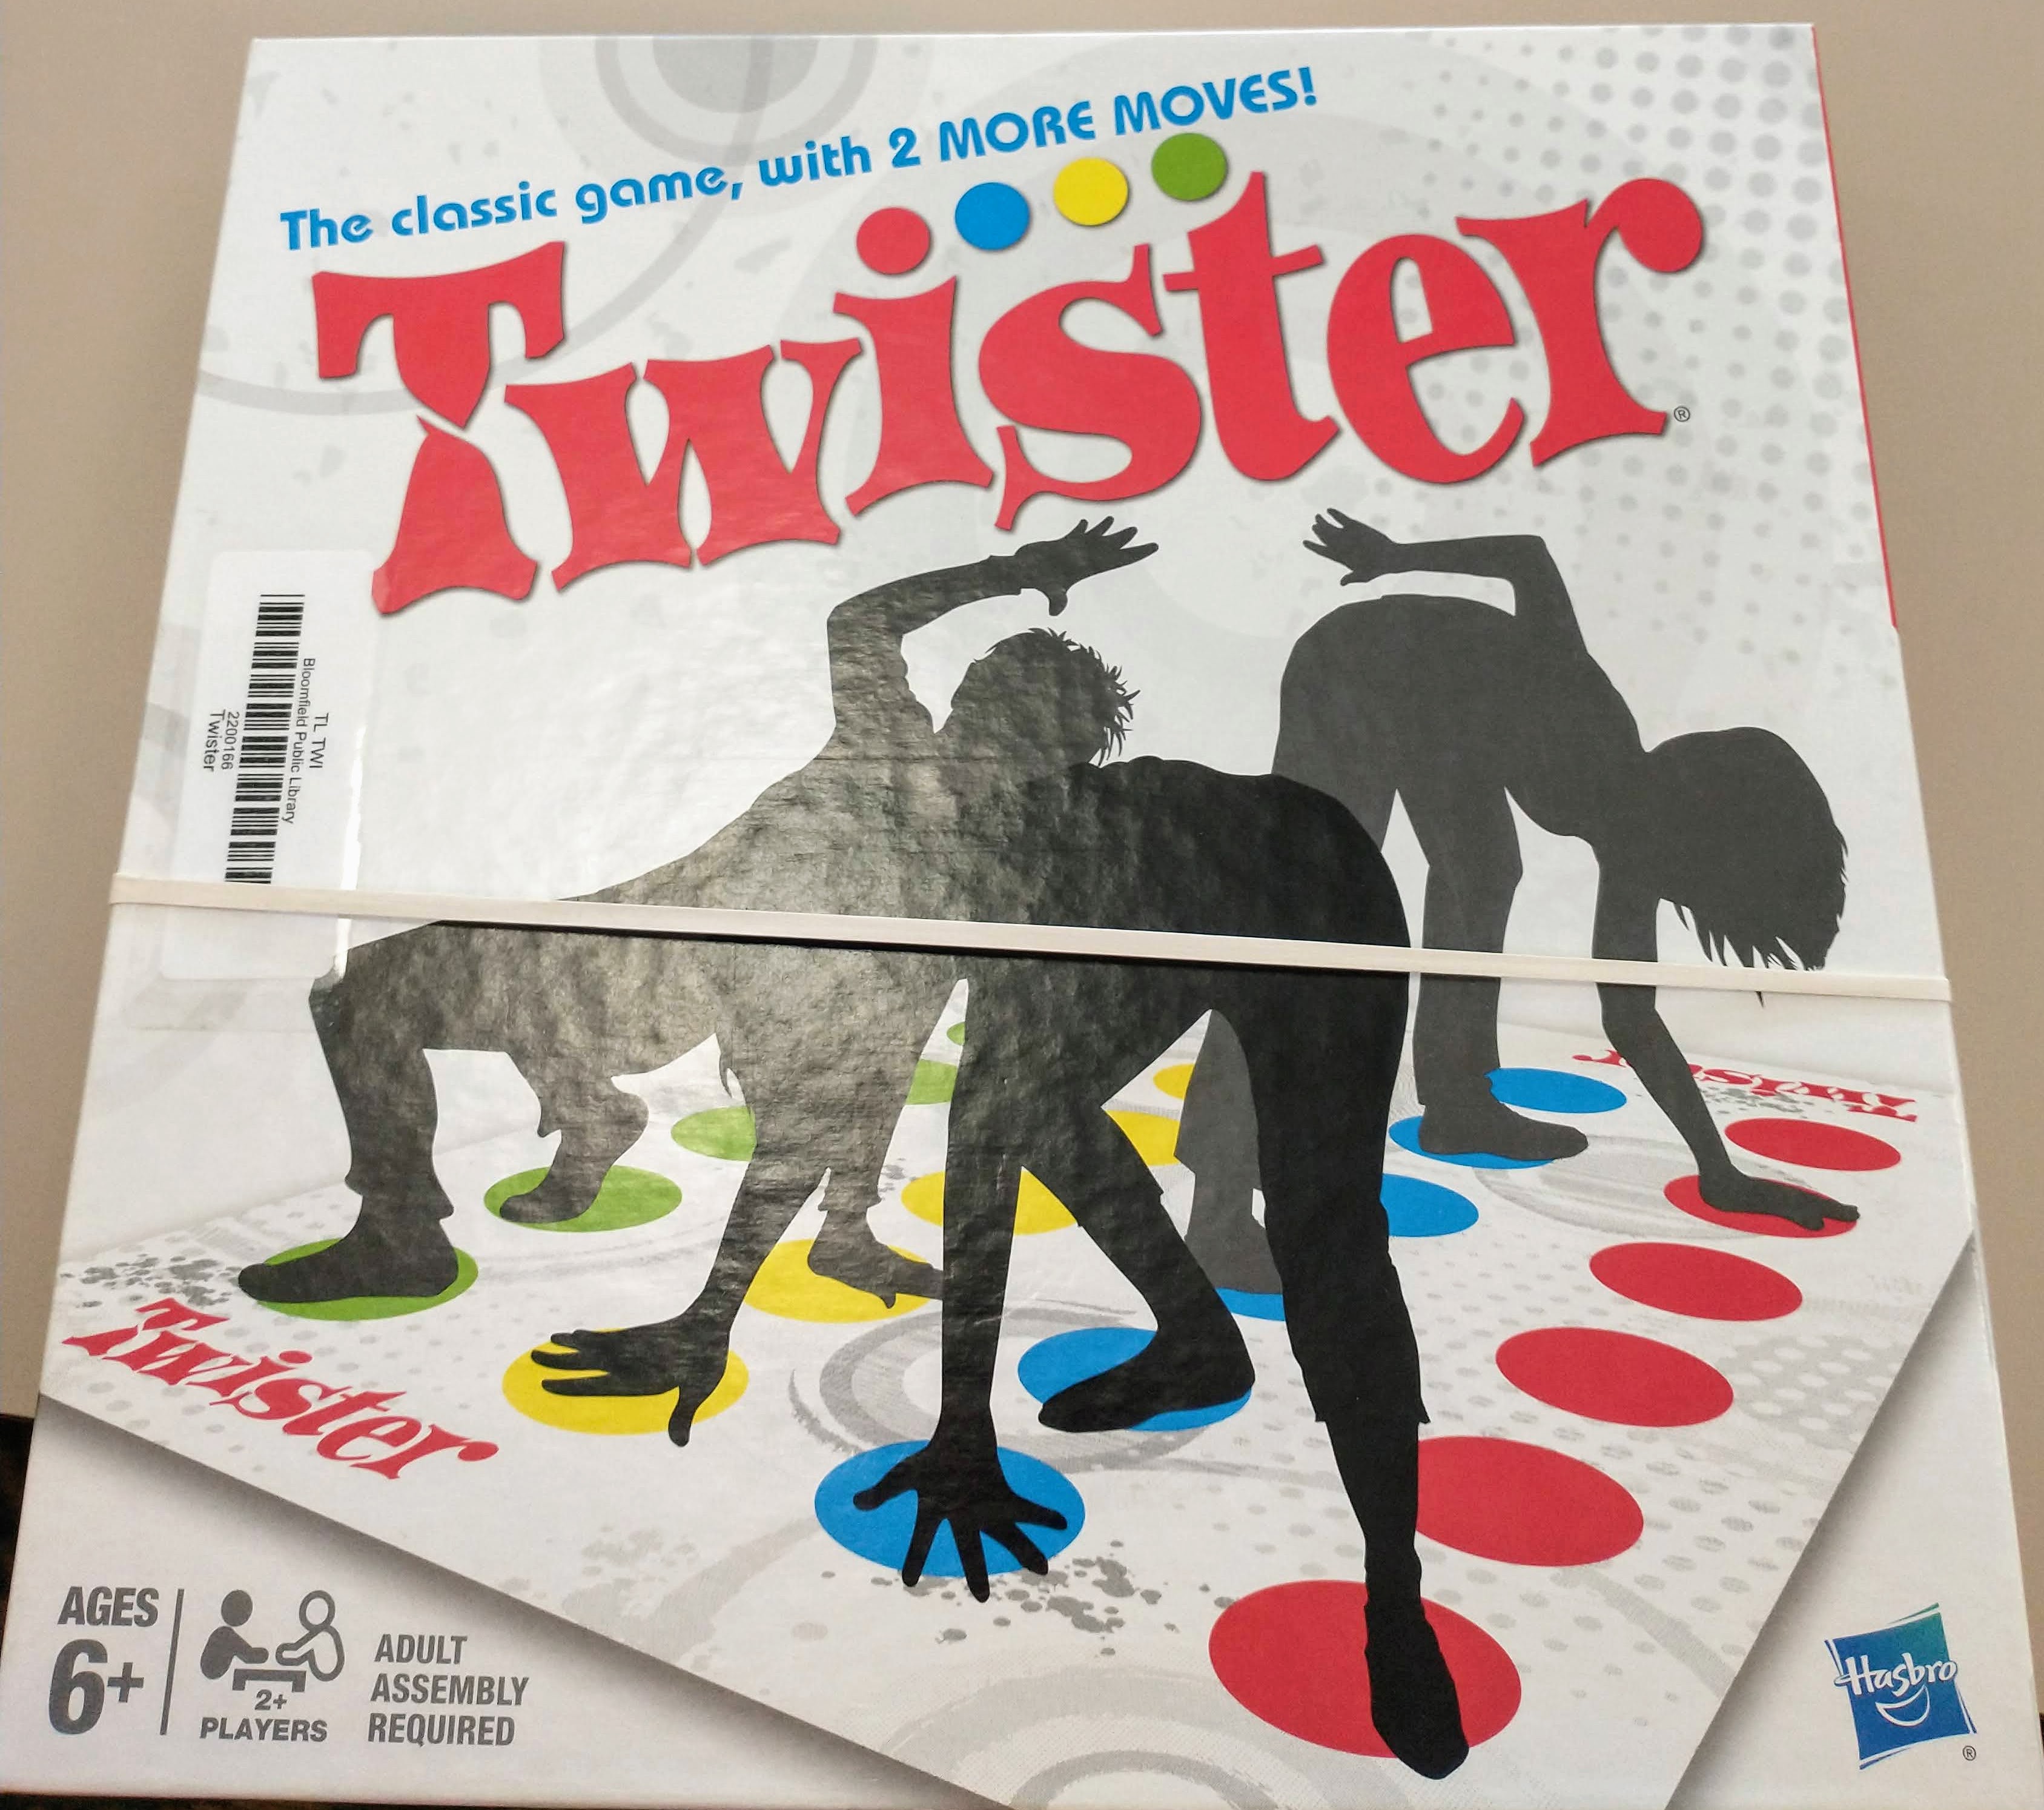 Twister.jpg